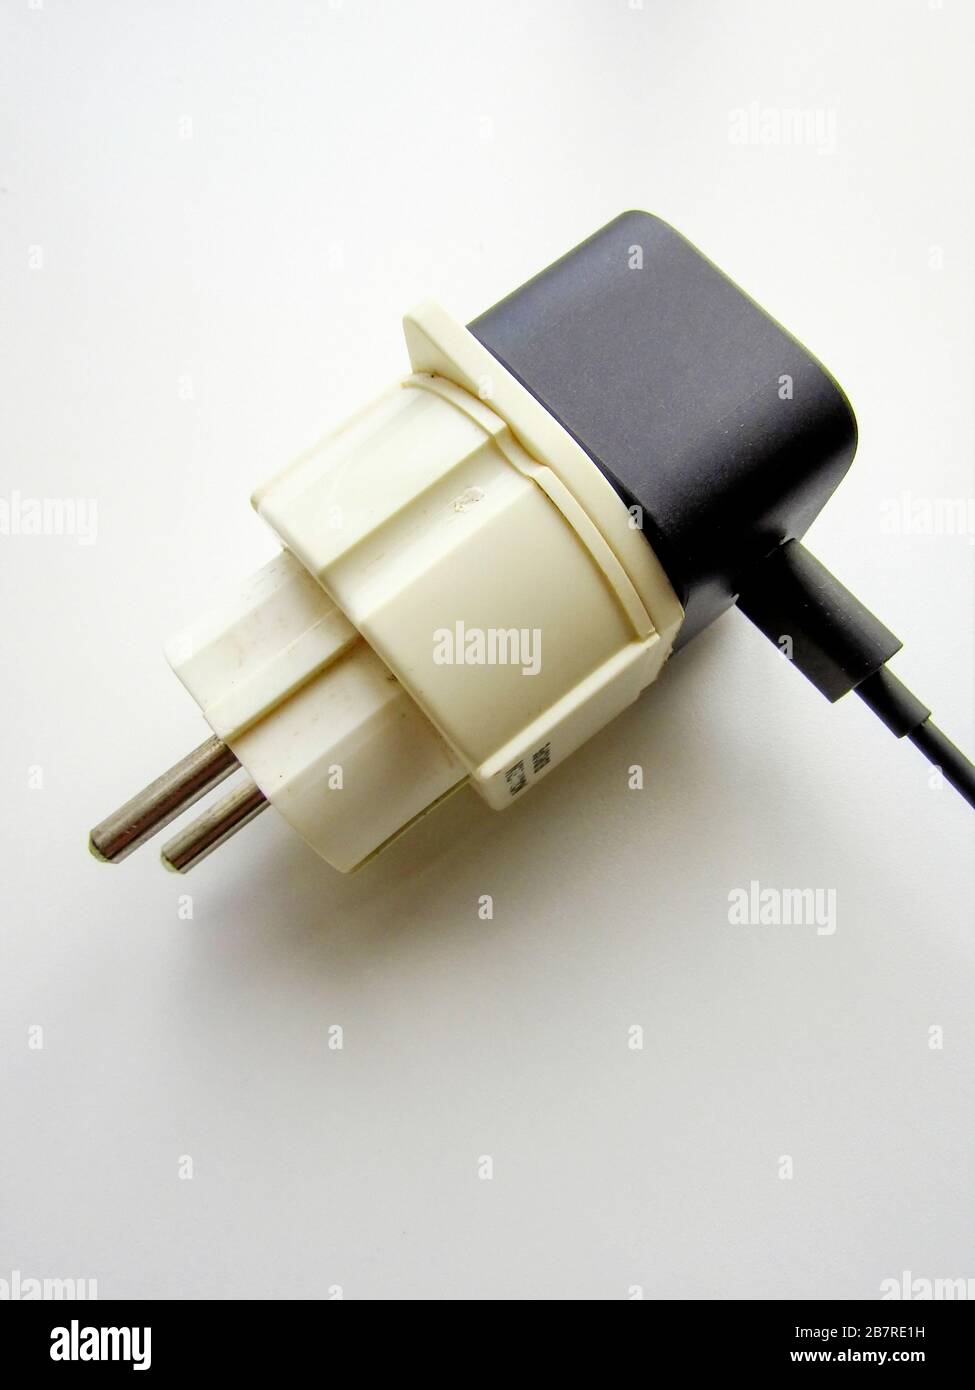 European plug adapter - UK 3 pin plug to European 2 pin plug travel adapter  Stock Photo - Alamy